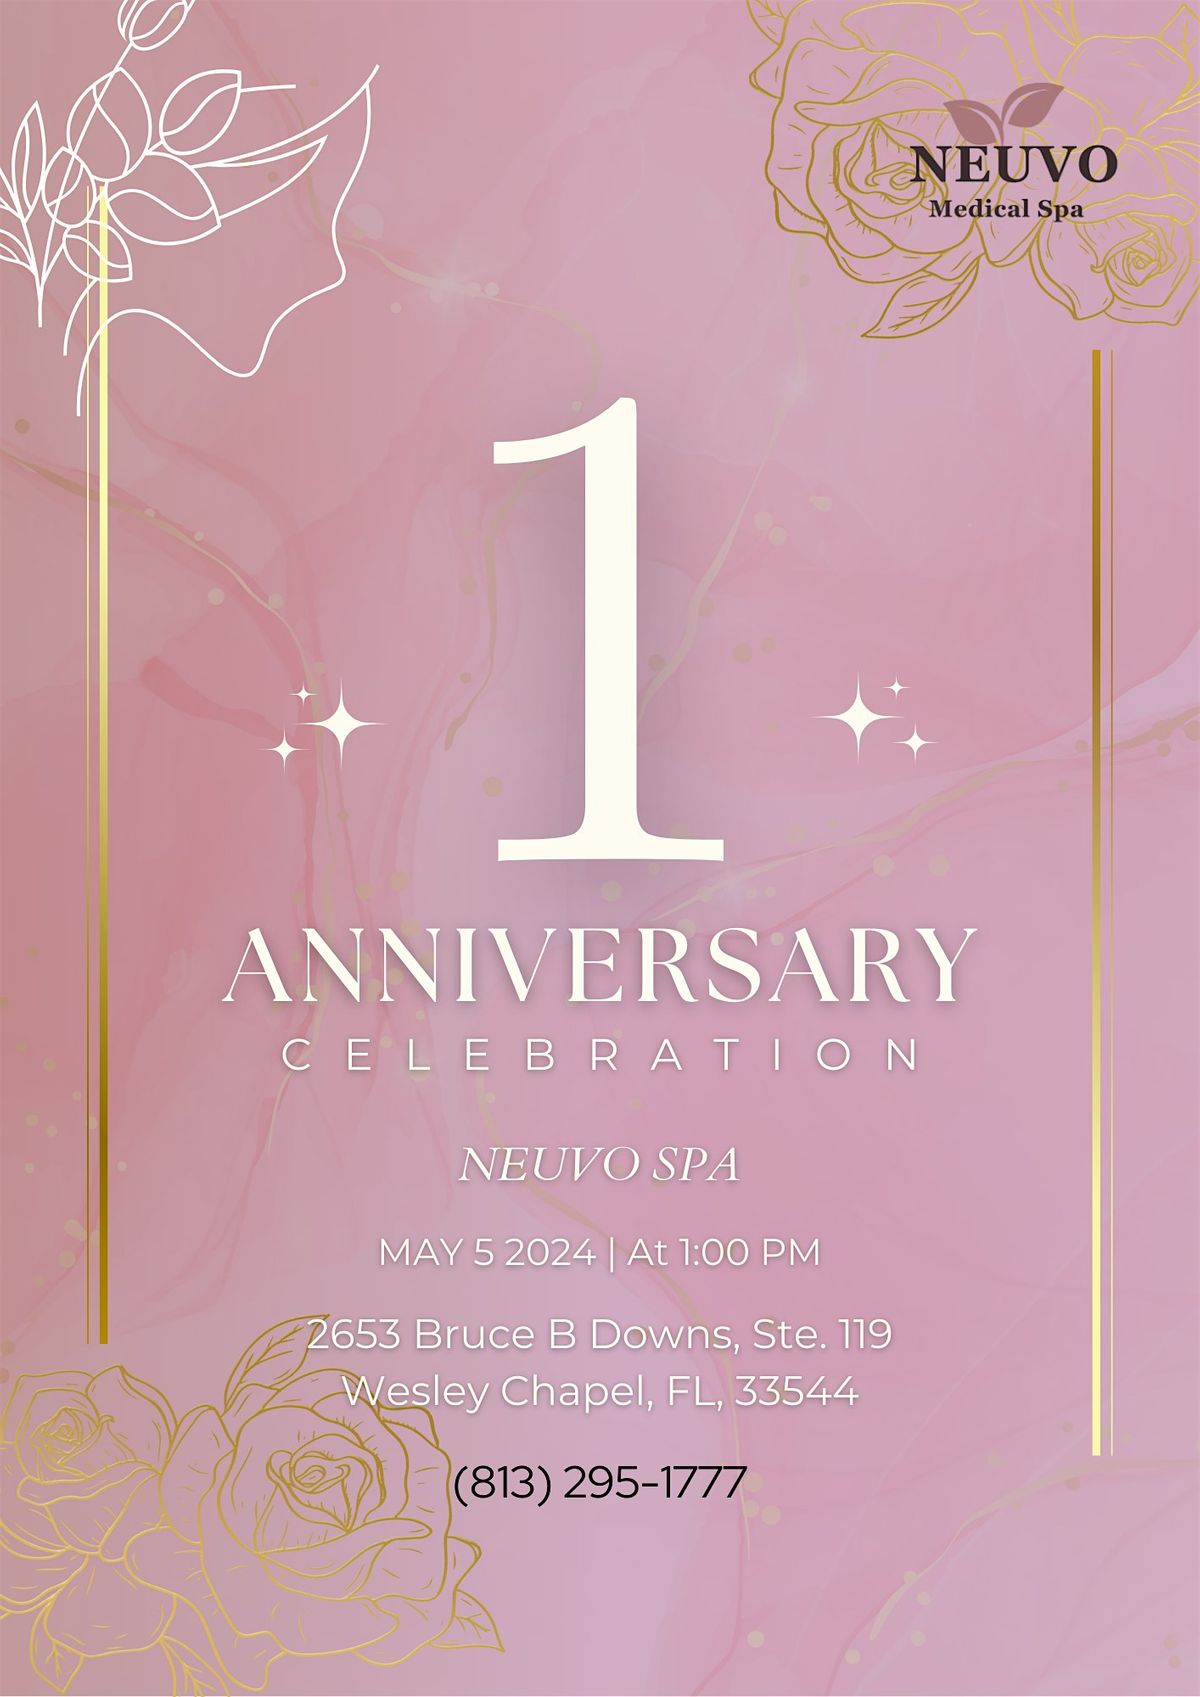 Celebrate Neuvo Med Spa's 1 Year Anniversary